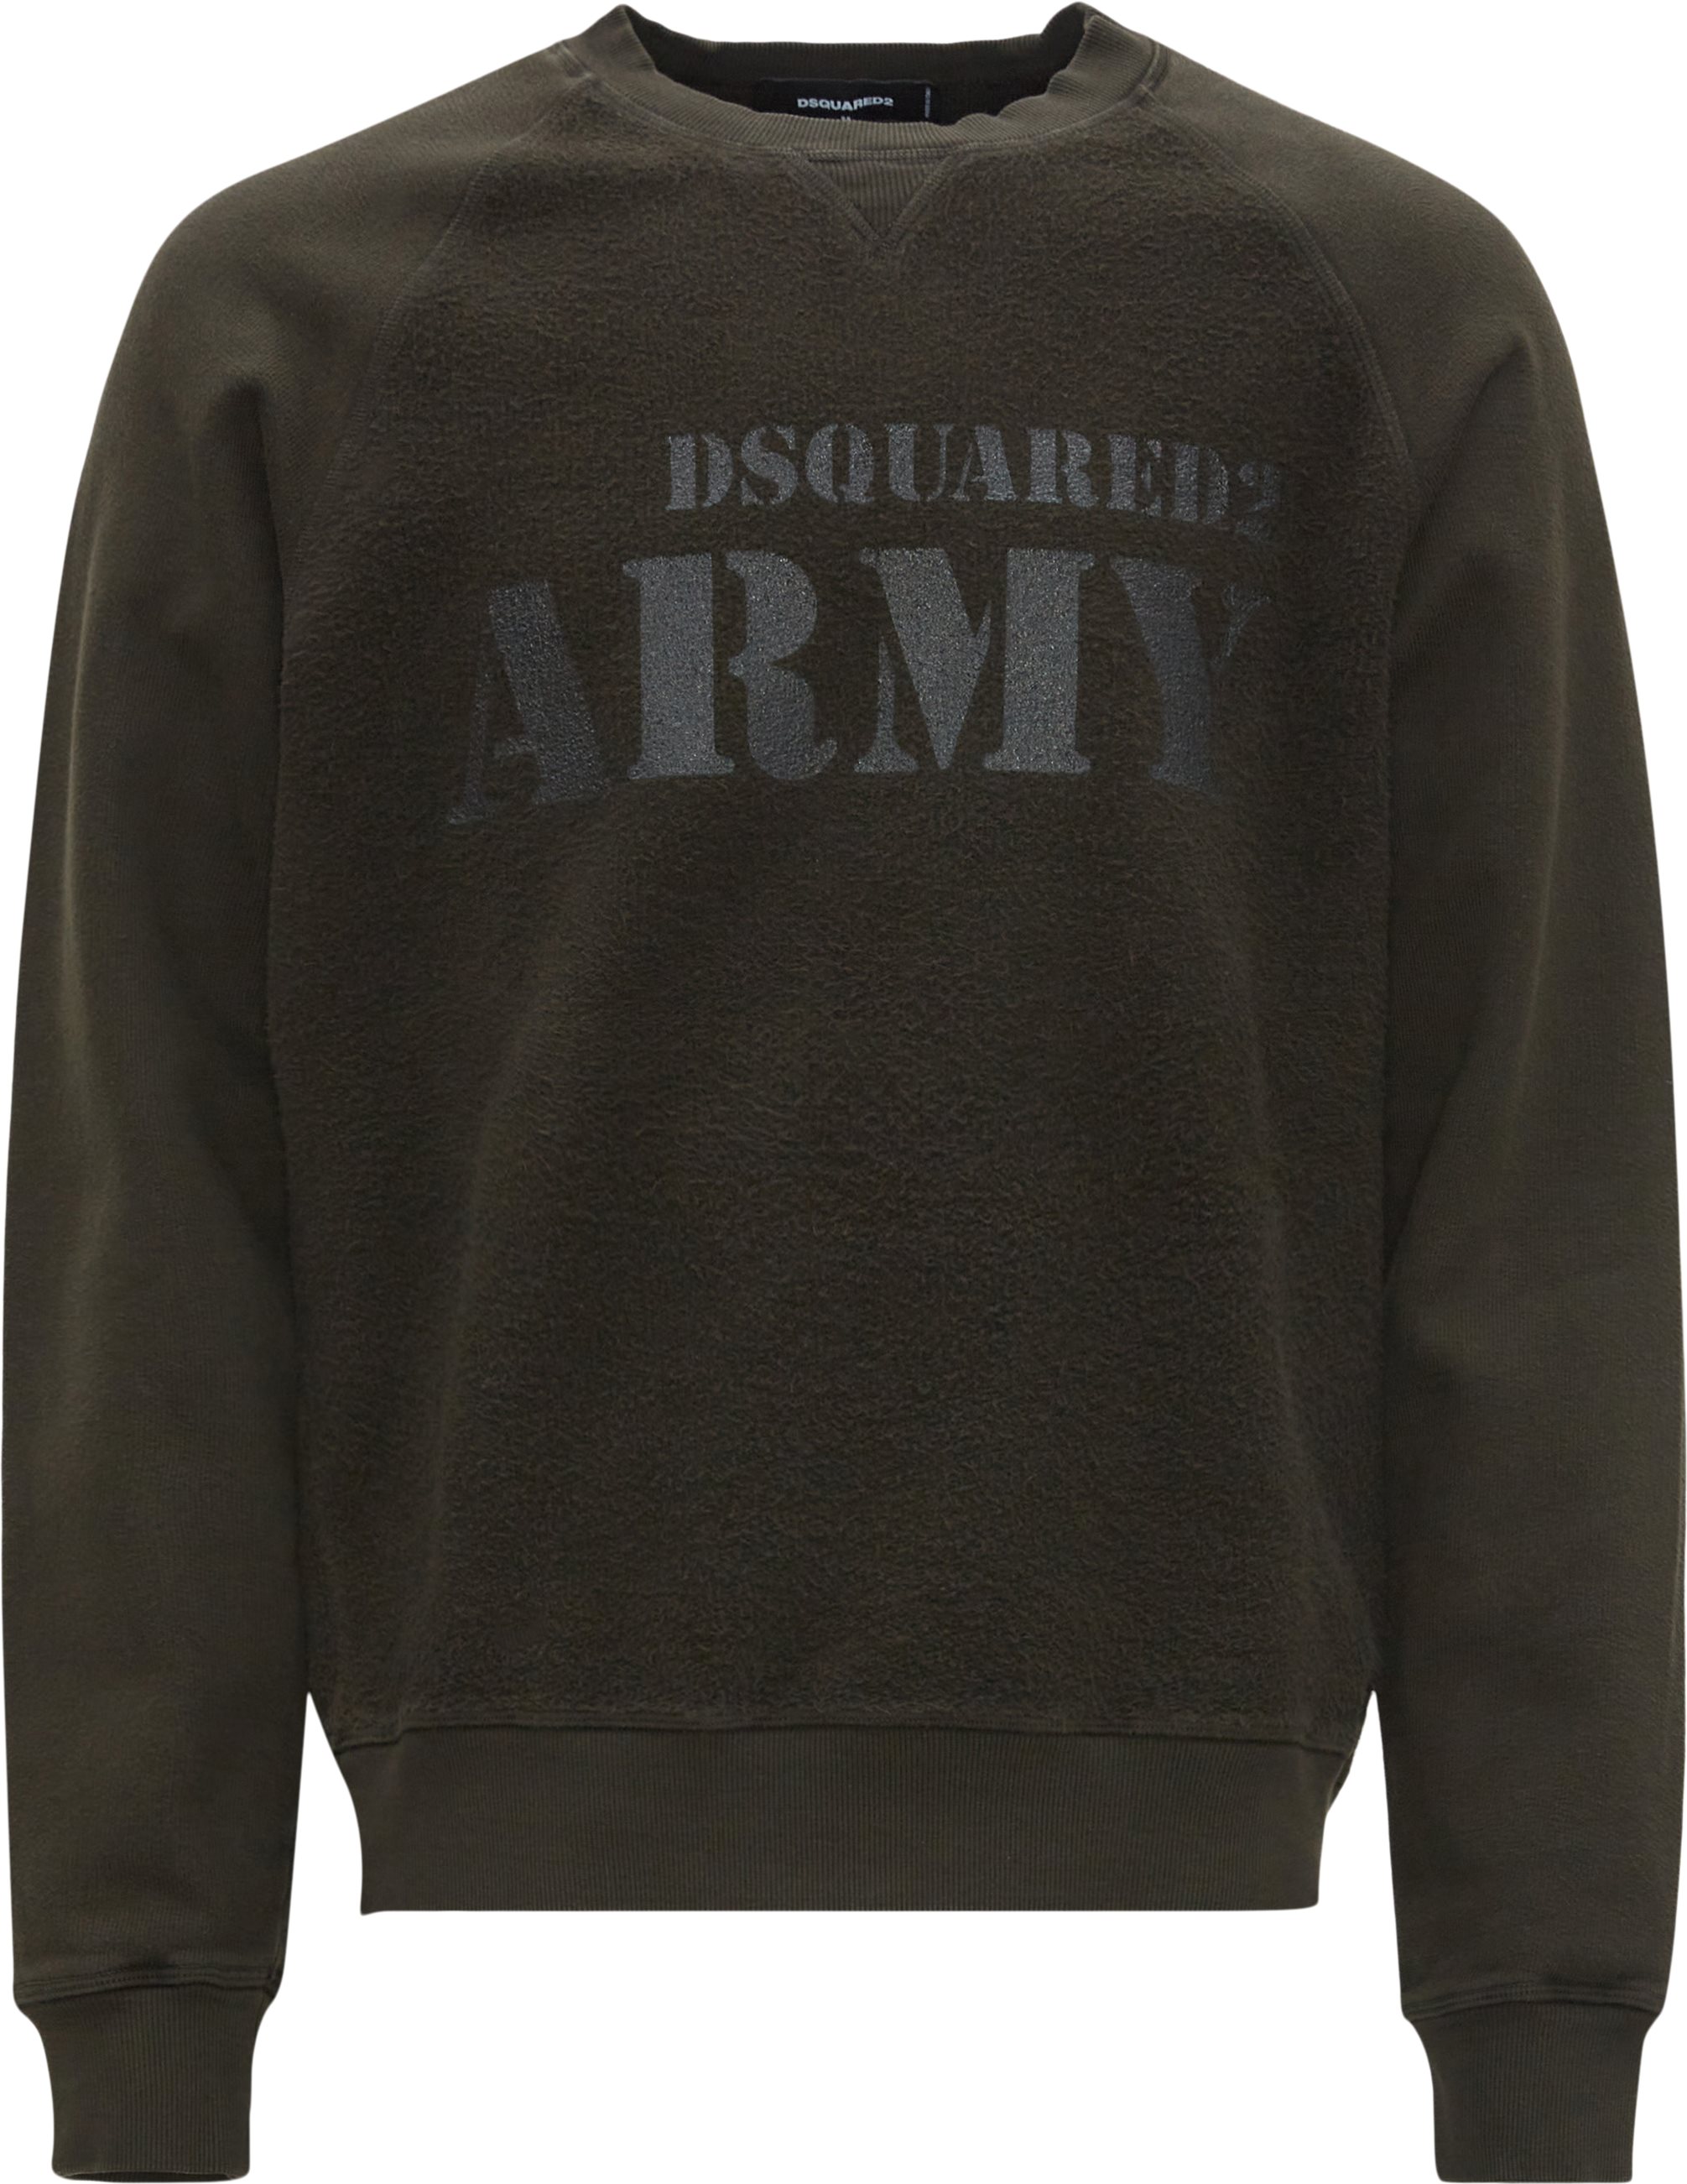 Dsquared2 Sweatshirts S71GU0544 S2556 Army